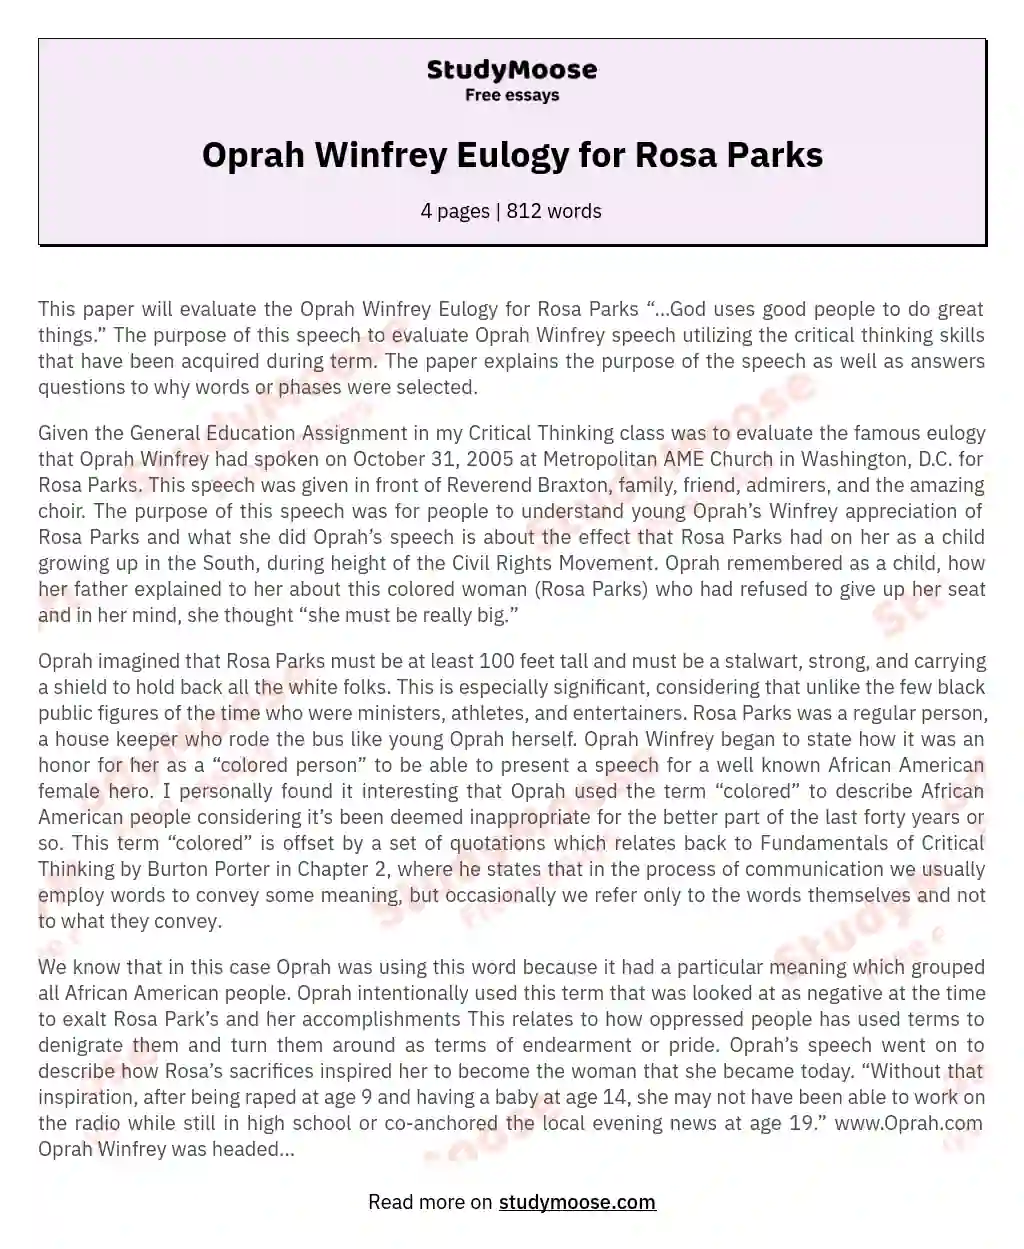 Oprah Winfrey Eulogy for Rosa Parks essay